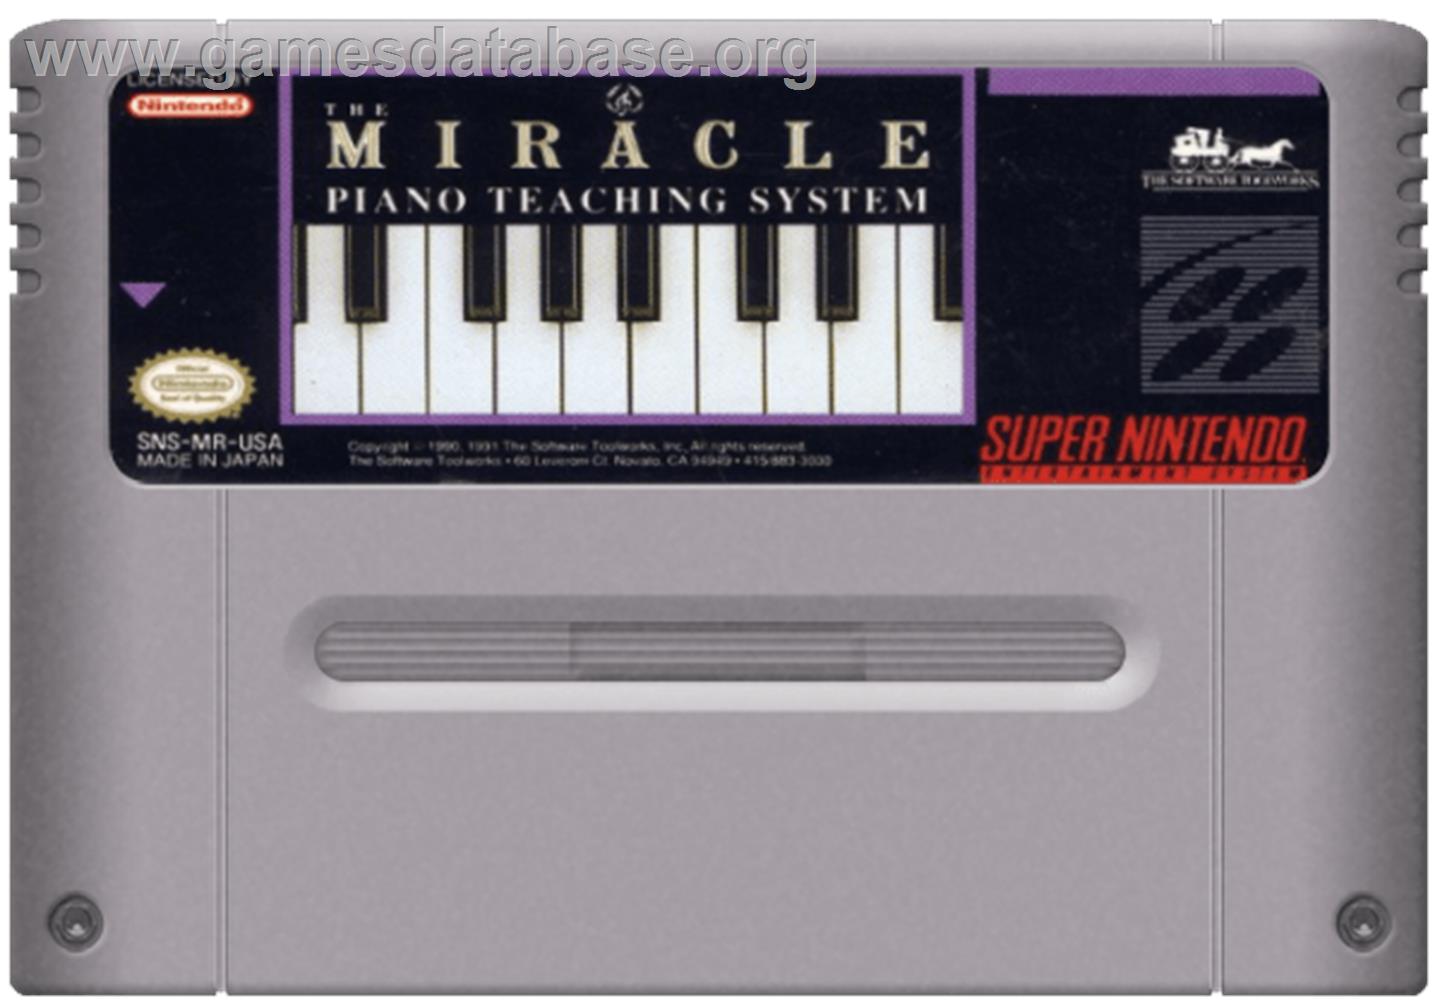 The Miracle Piano Teaching System - Nintendo SNES - Artwork - Cartridge